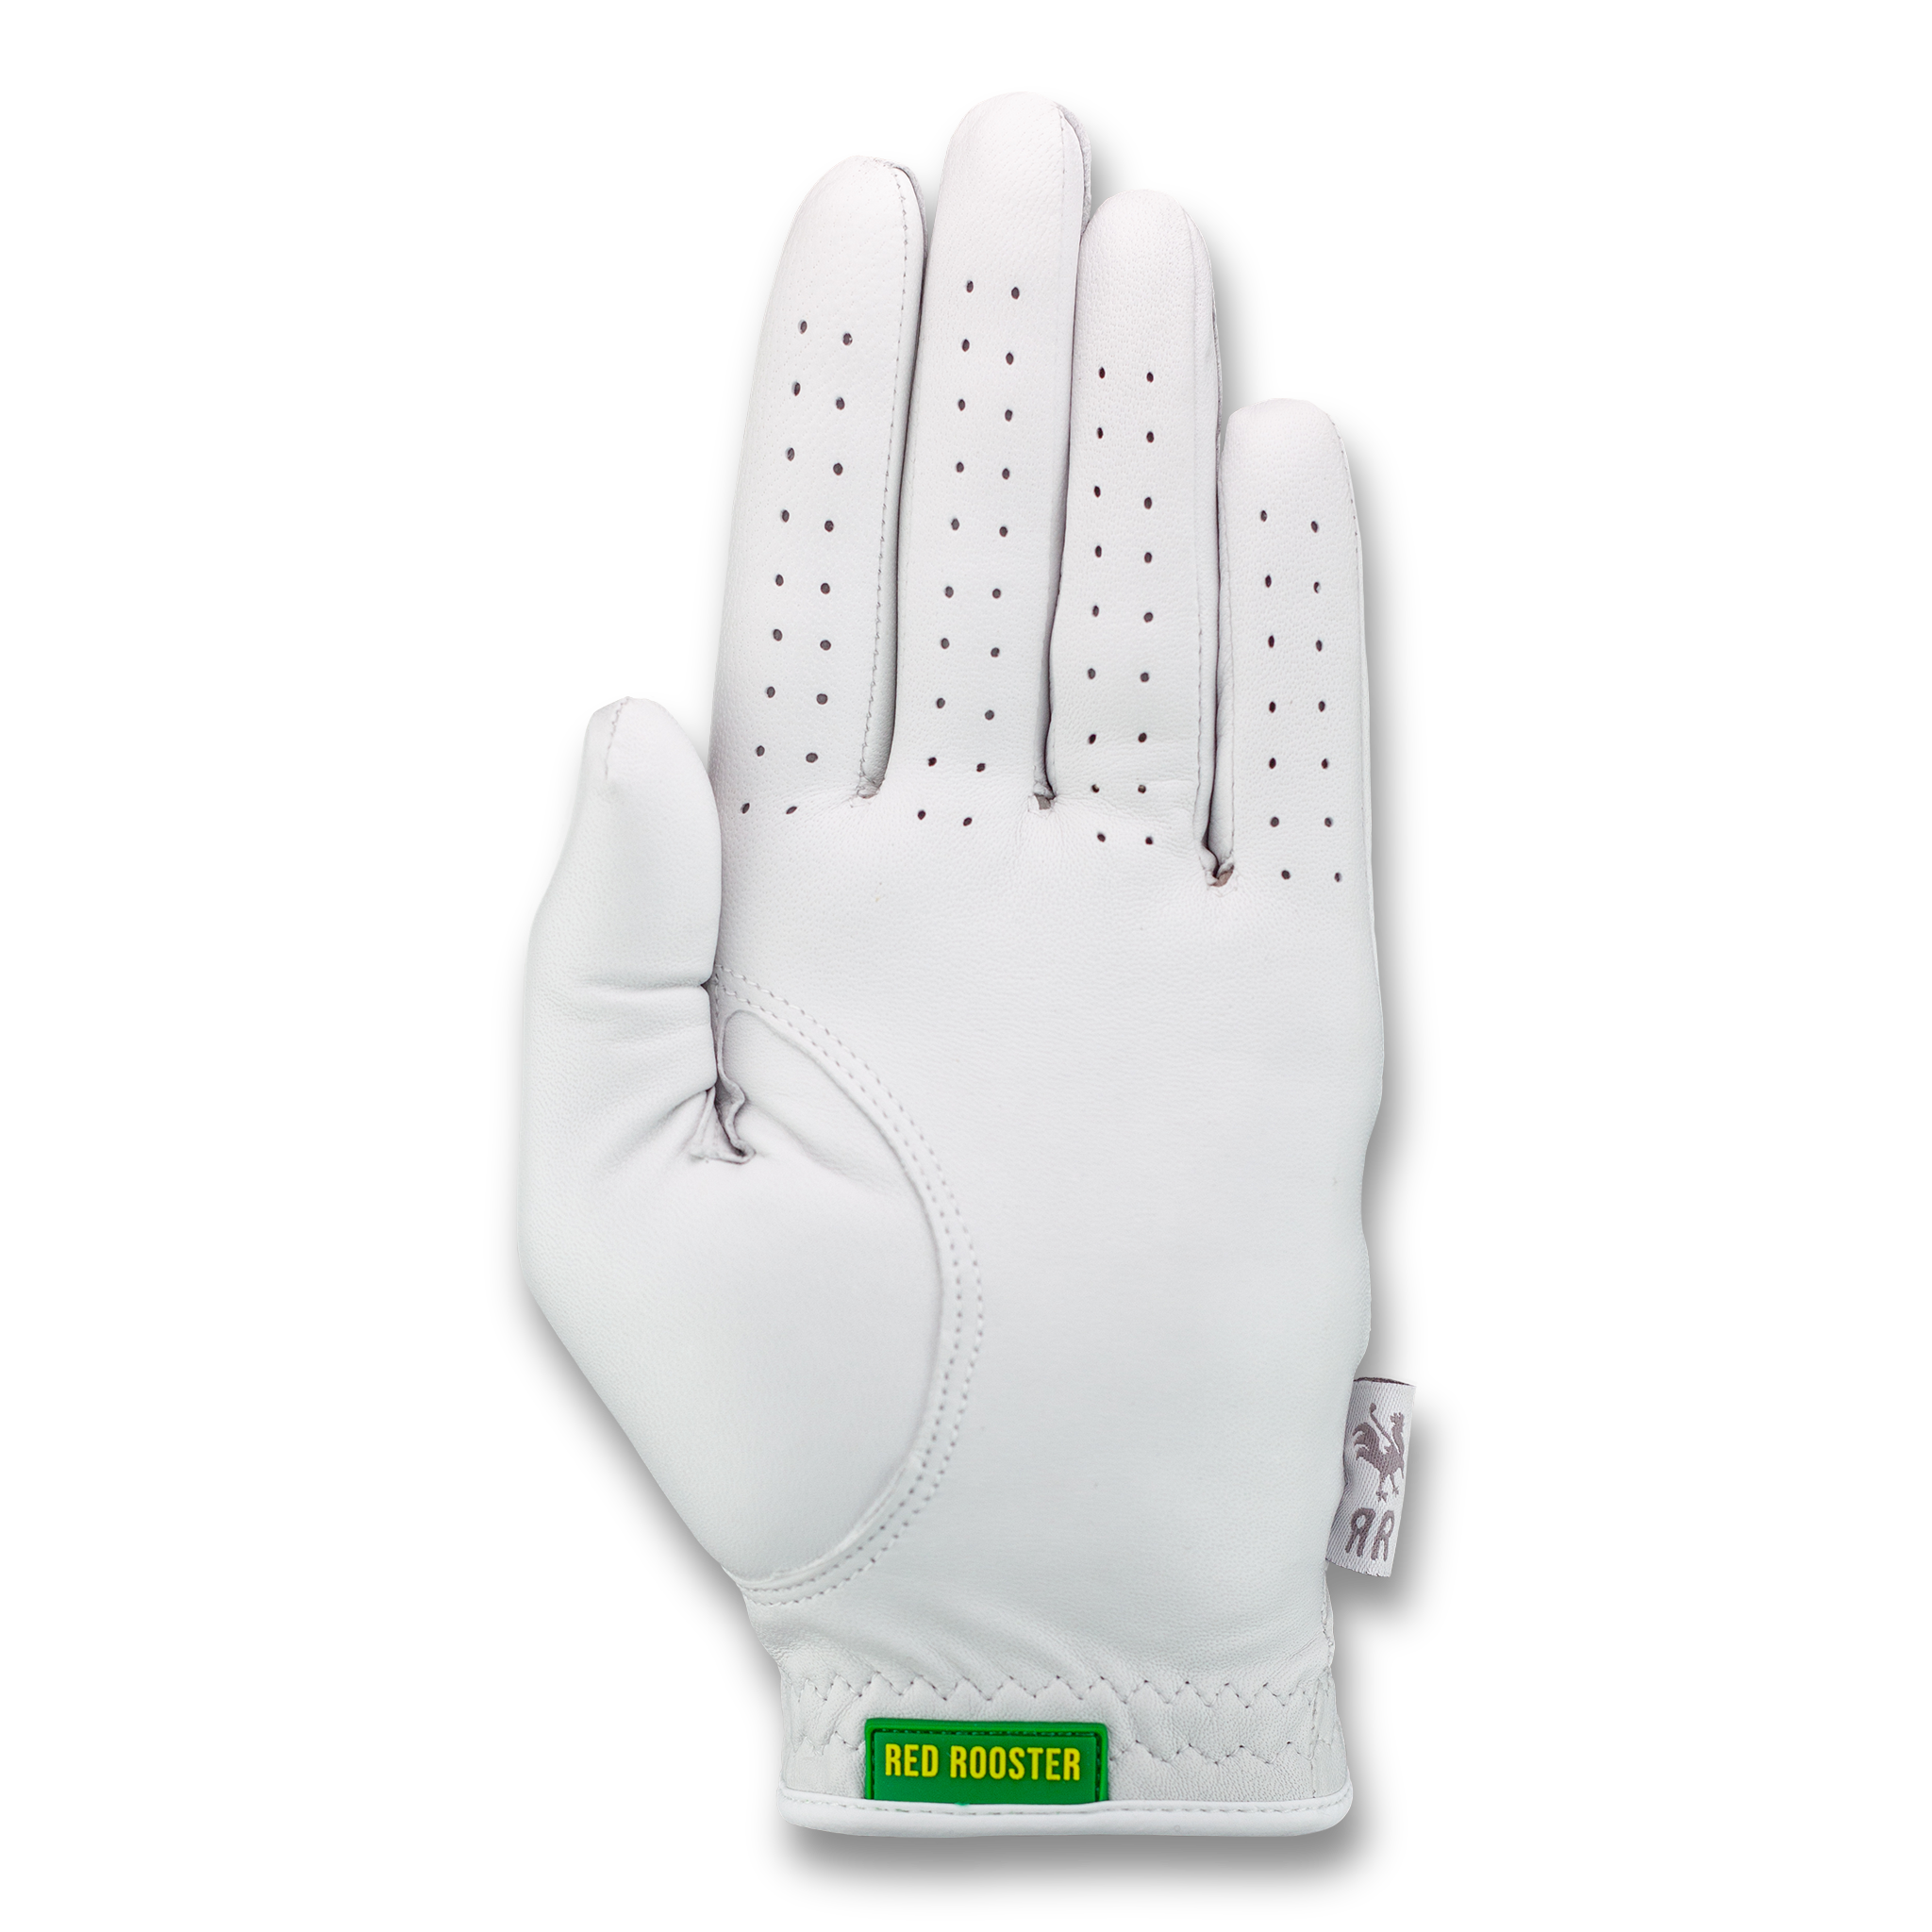 The Scramble left hand golf glove